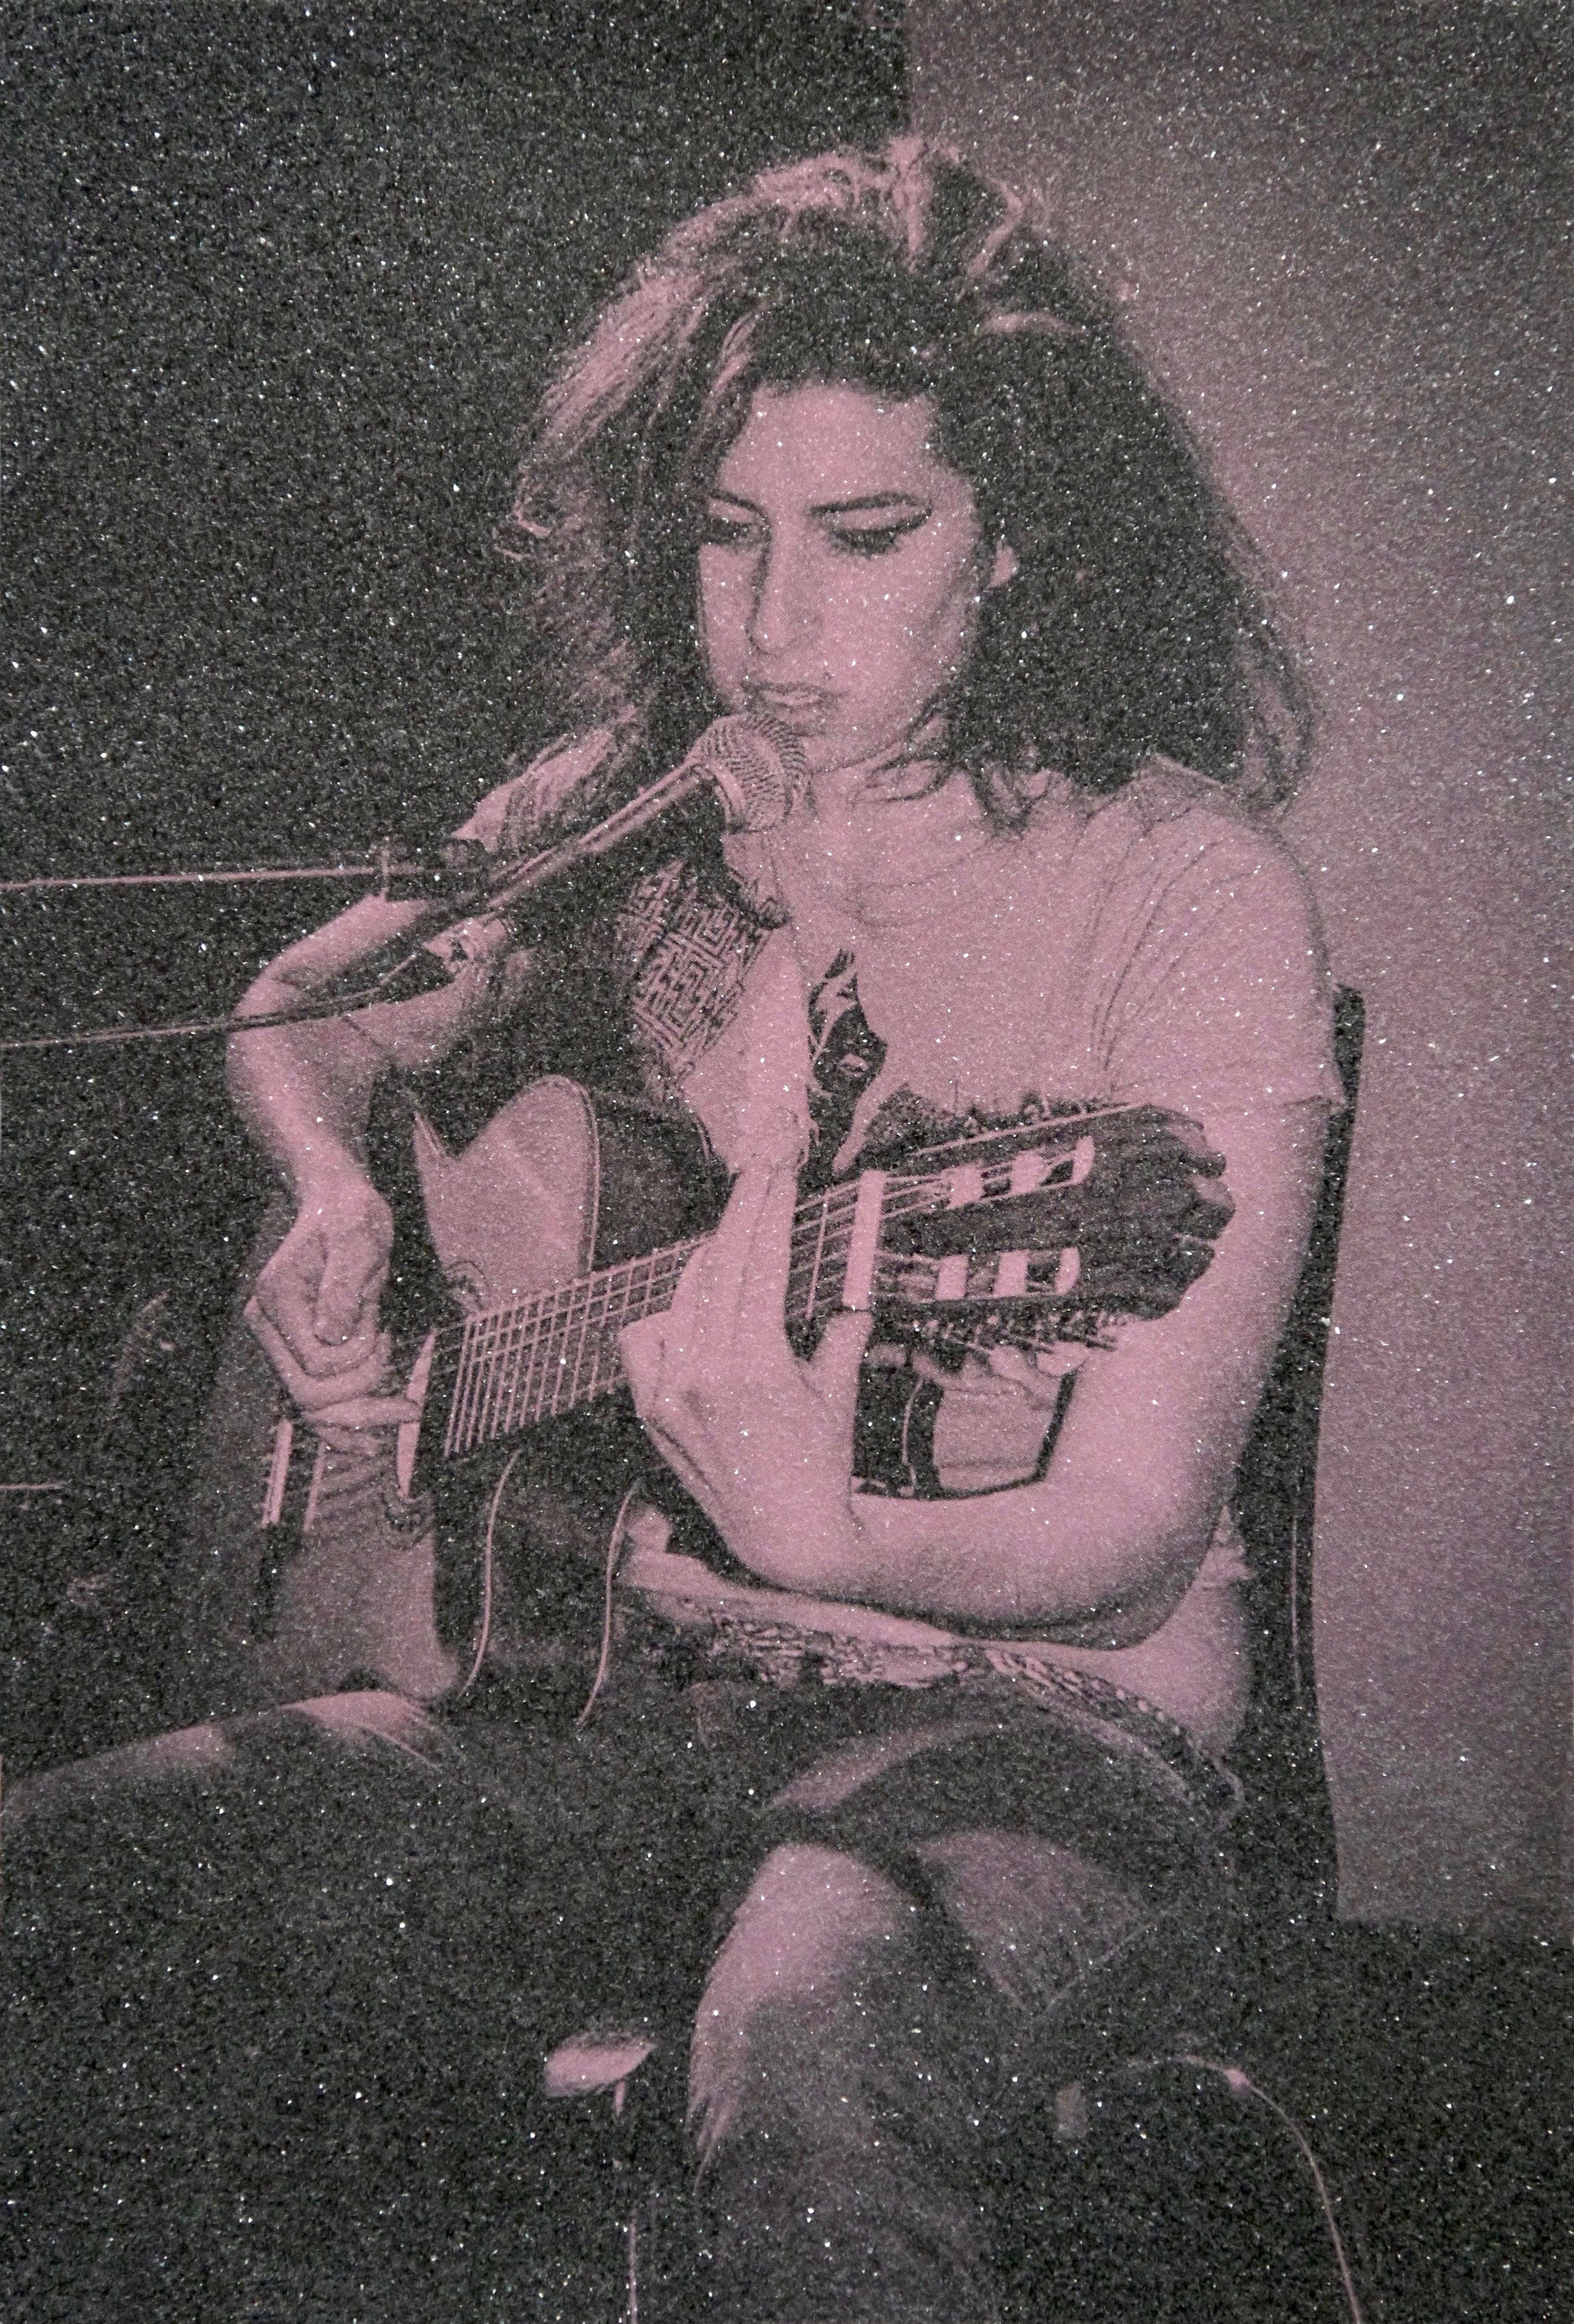 David Studwell - Amy Winehouse IV Co-Signed - Diamond Dust